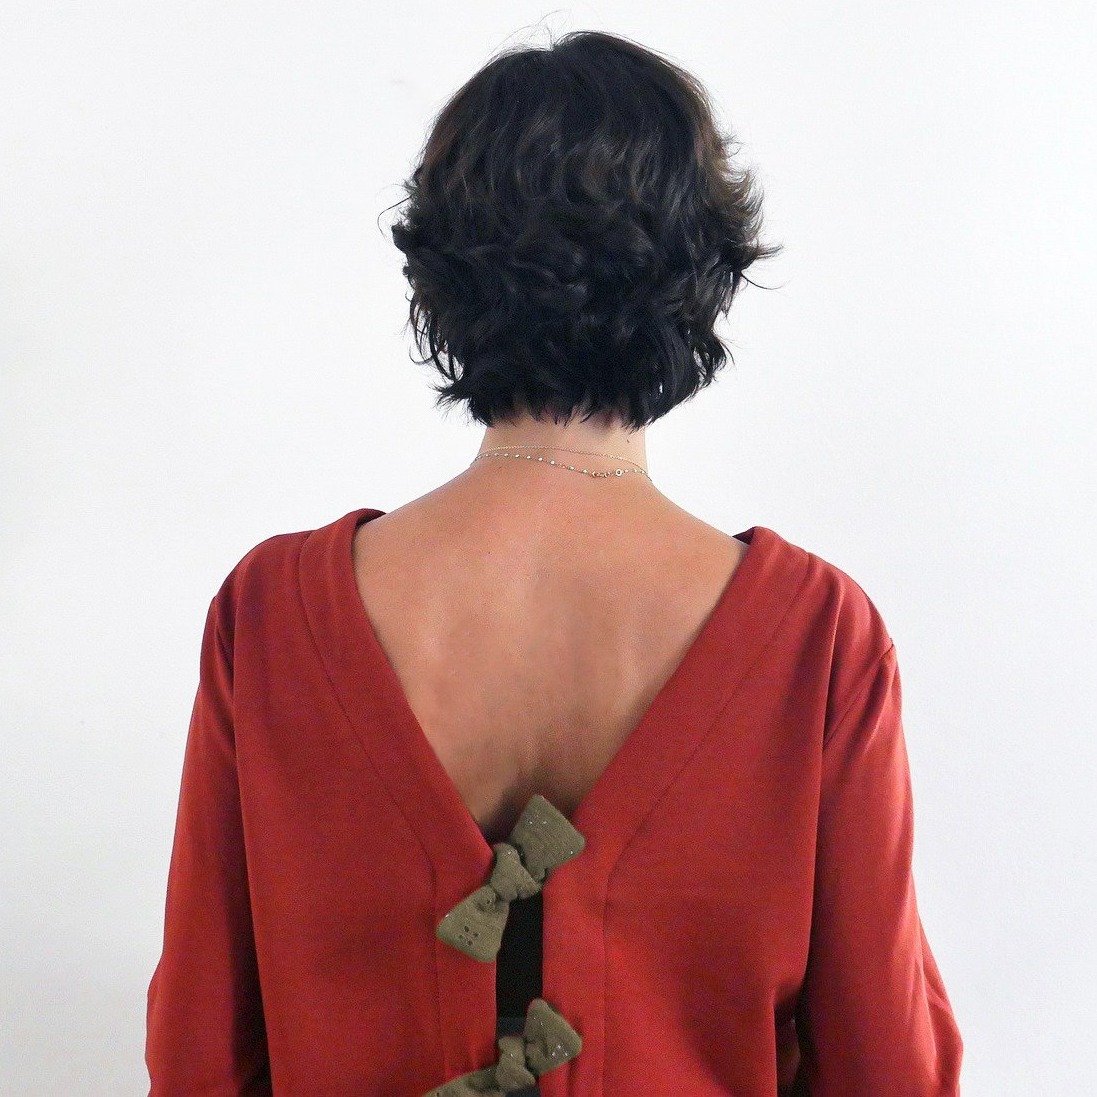 Ikatee - MASHA Adult cardigan/sweater - 34/46 - Paper Sewing Pattern